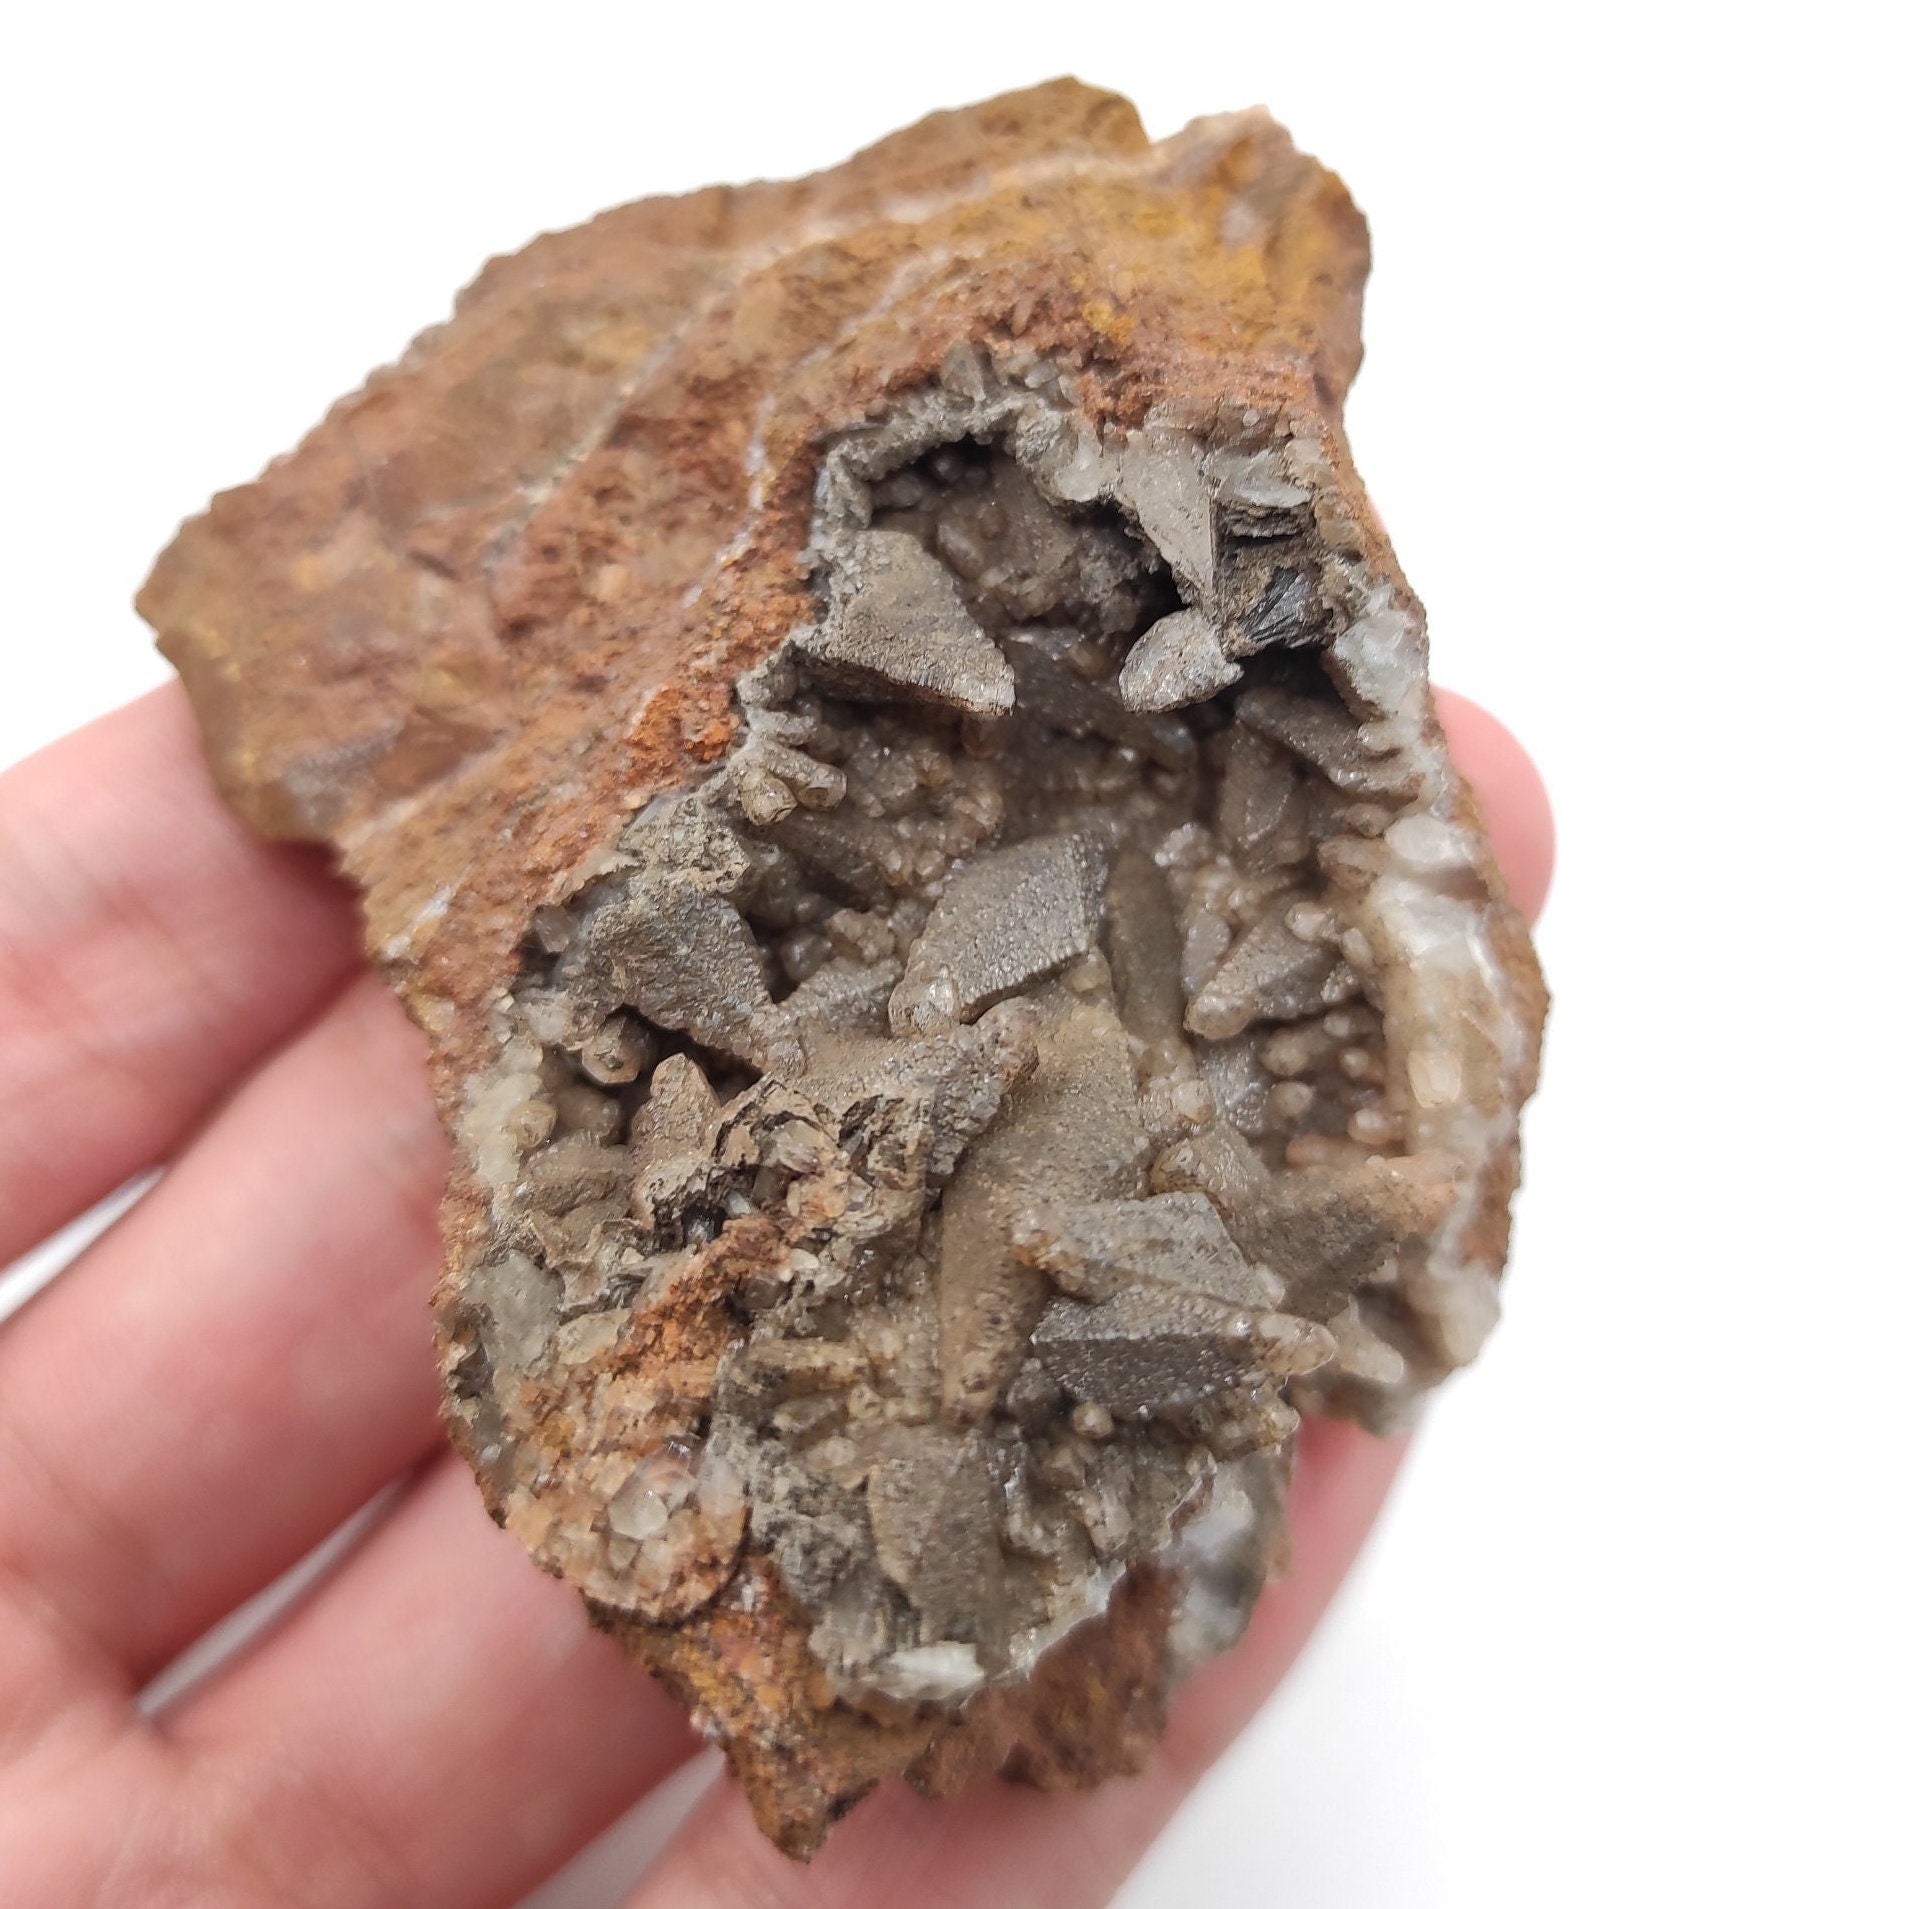 86g UV Reactive Calcite - Phosphorescent Calcite Specimen - Cambridge Cove, Nova Scotia, Canada - UV Minerals - Minerals with Afterglow